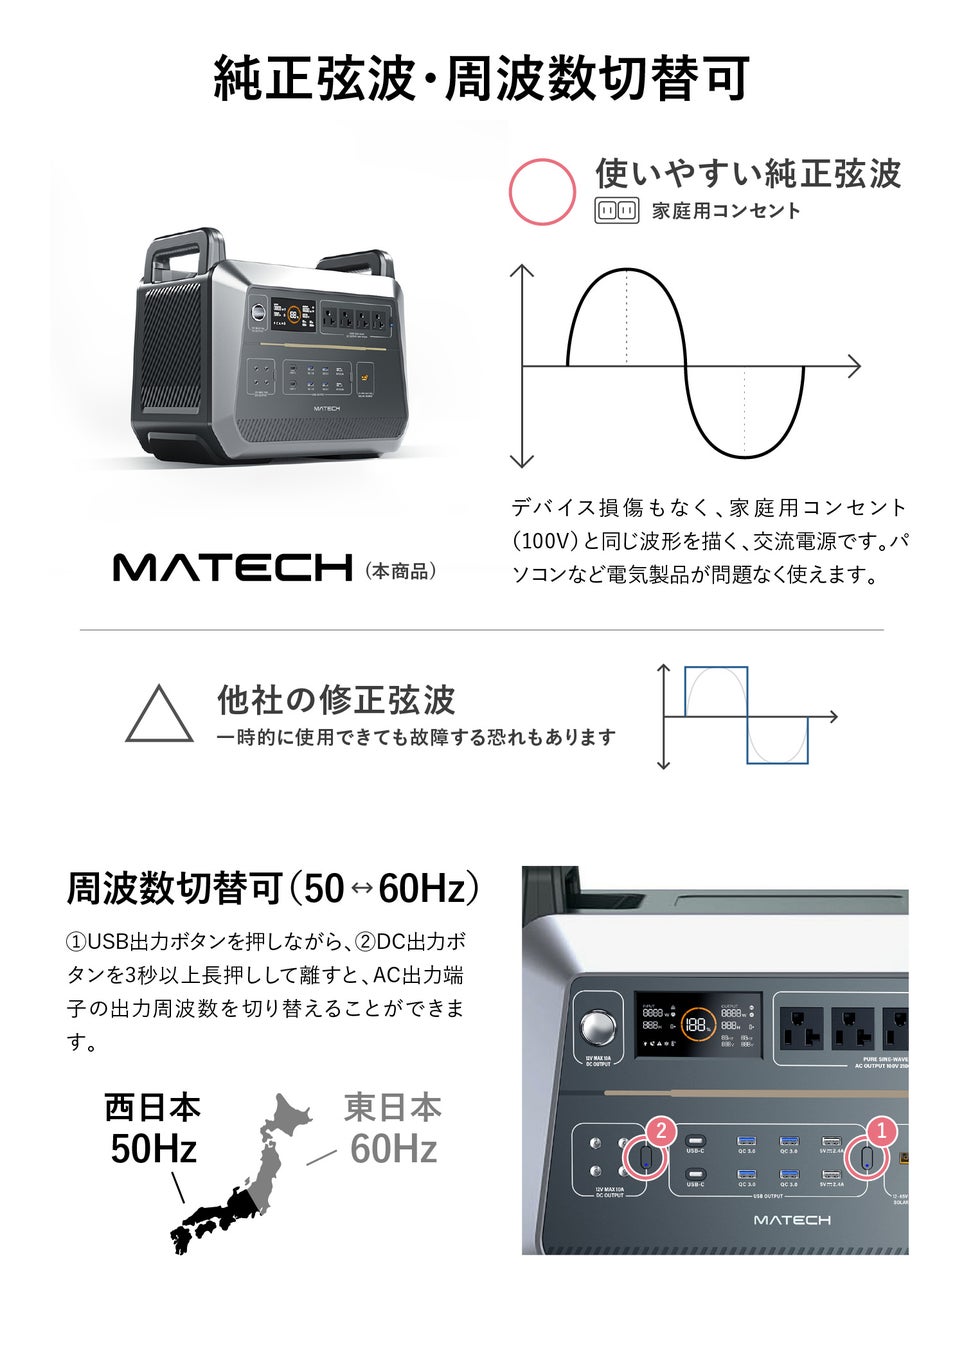 【MATECH】長寿命リン酸鉄リチウムのポータブル電源「PowerZ Pro 2000」を販売開始のサブ画像4